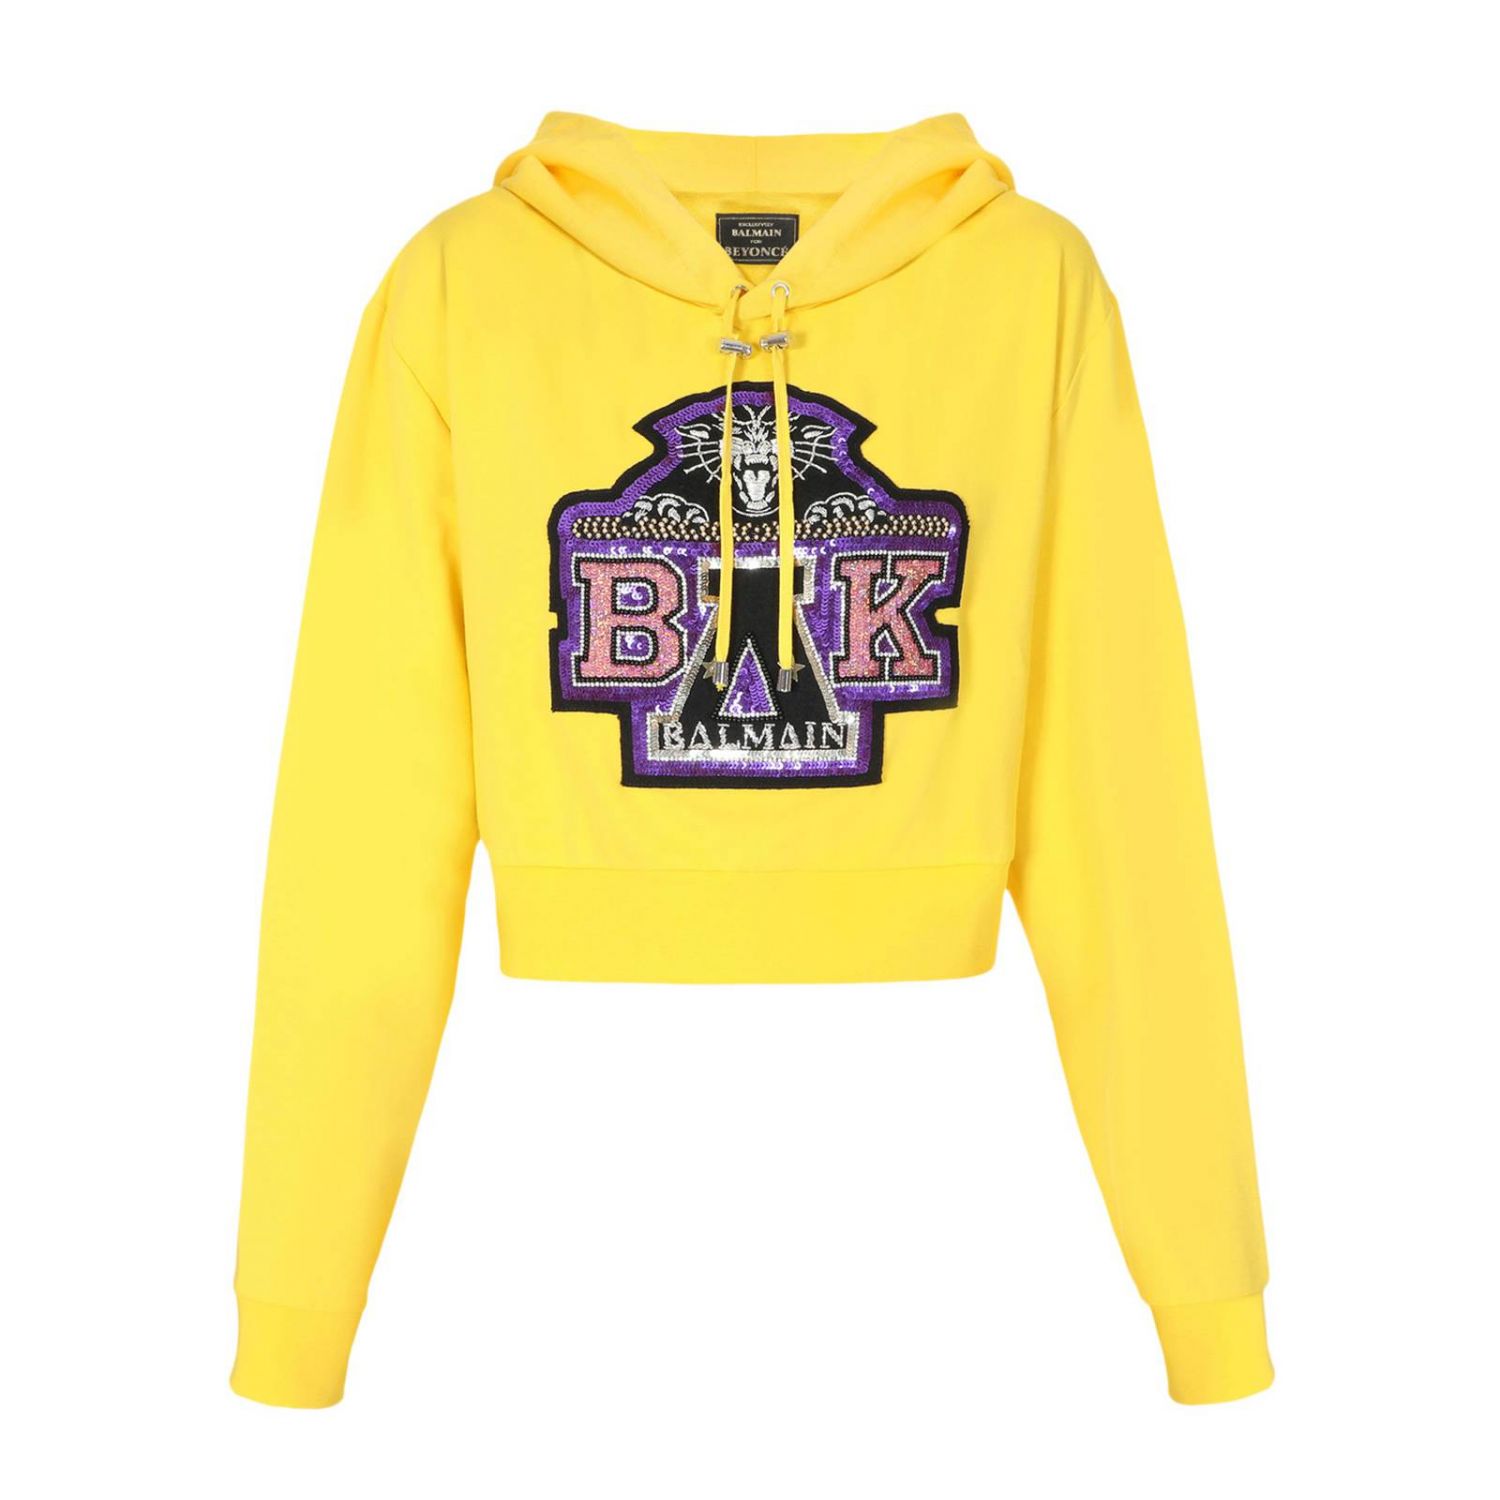 Balmain for Beyoncé Limited Edition sweatshirt with maxi crest BAK ...